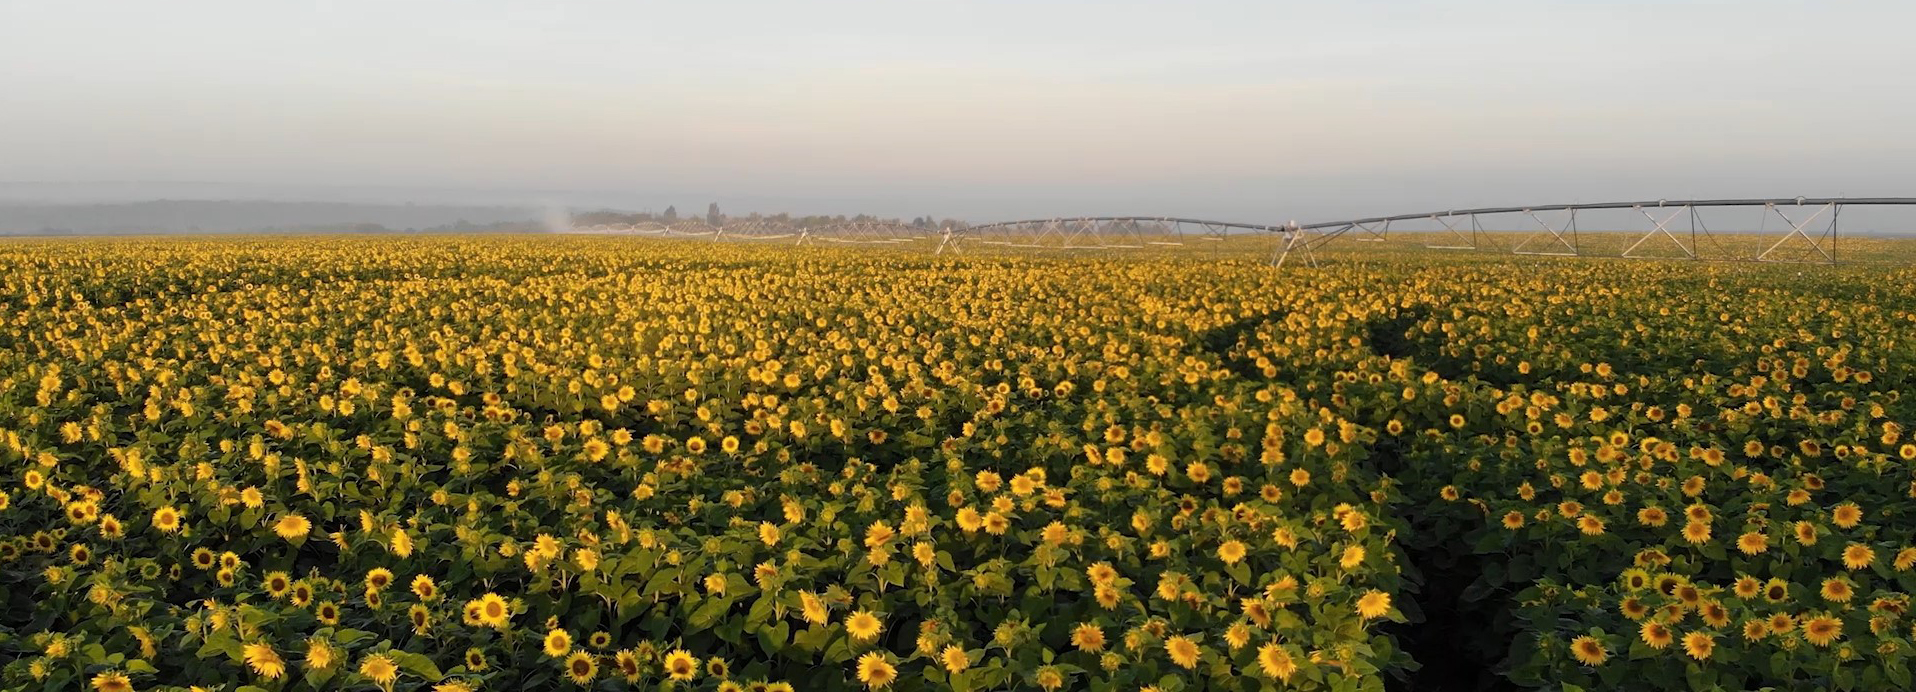 kws-sunflower-seed-production-2020-14-2.jpg